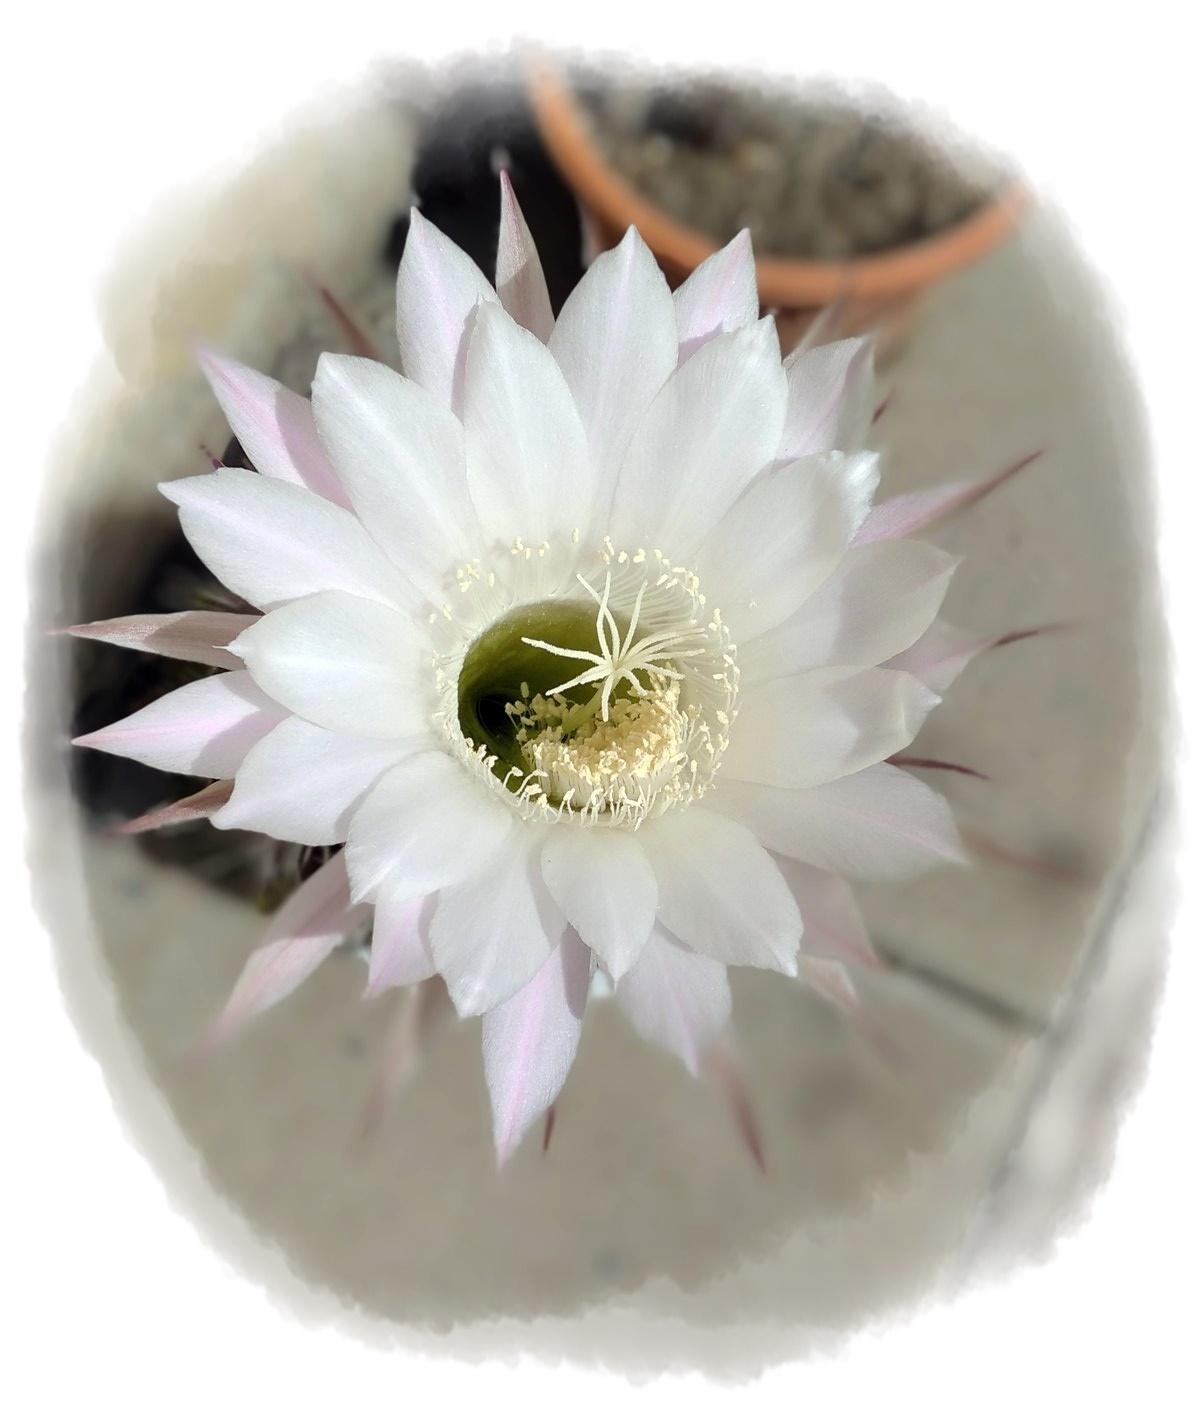 Stařičký kaktus